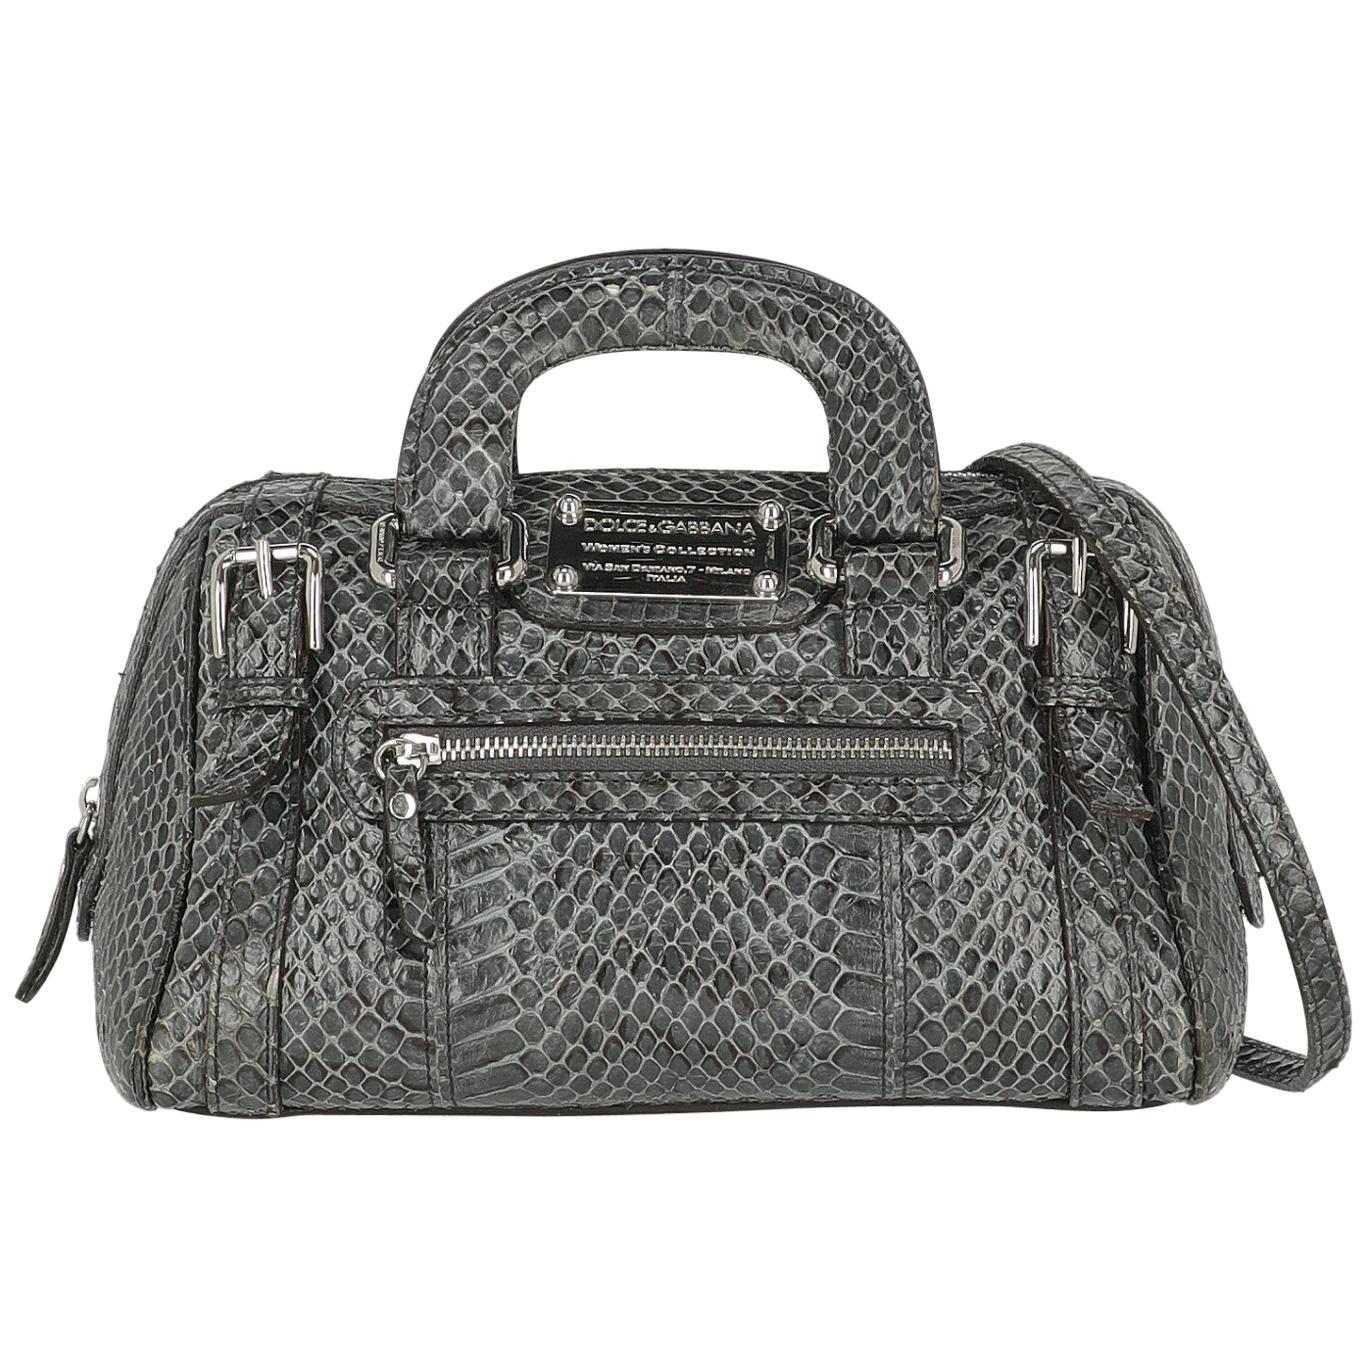 Dolce & Gabbana Woman Handbag Grey Leather For Sale